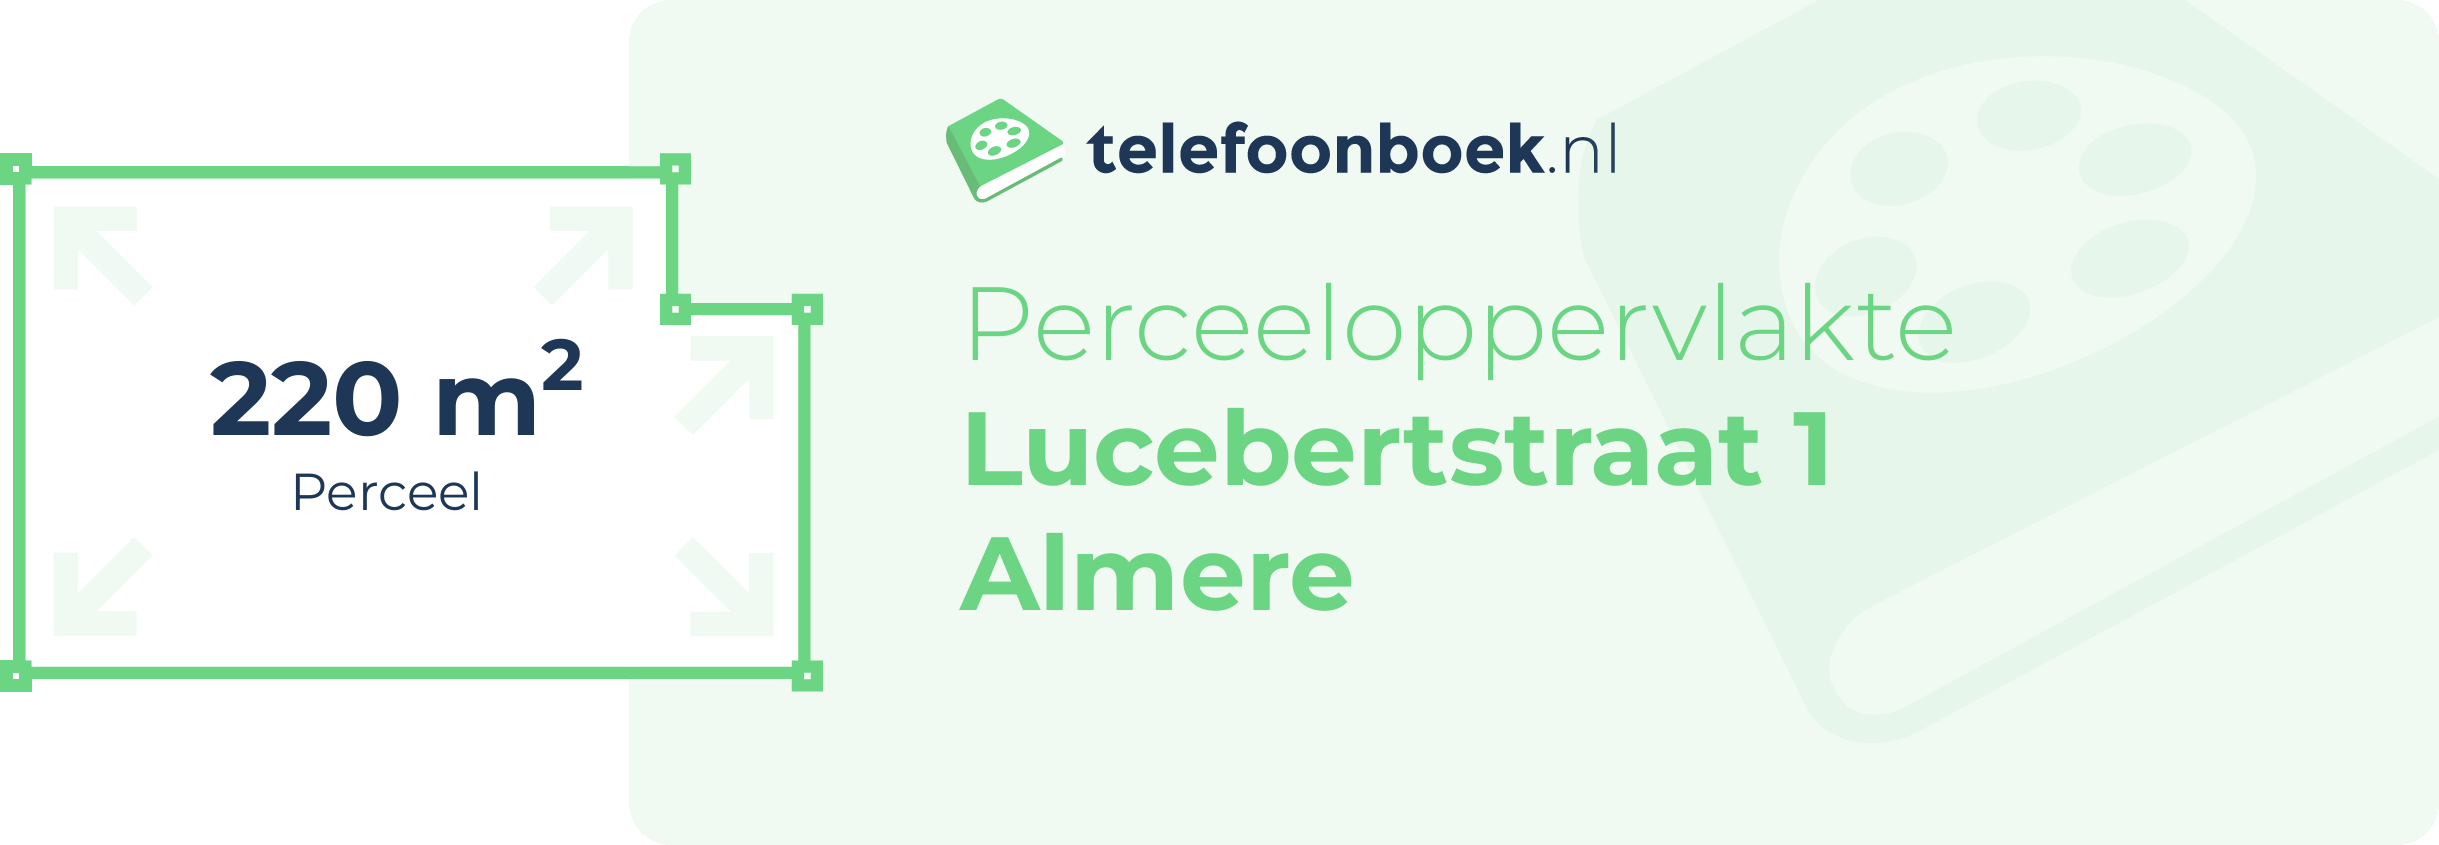 Perceeloppervlakte Lucebertstraat 1 Almere